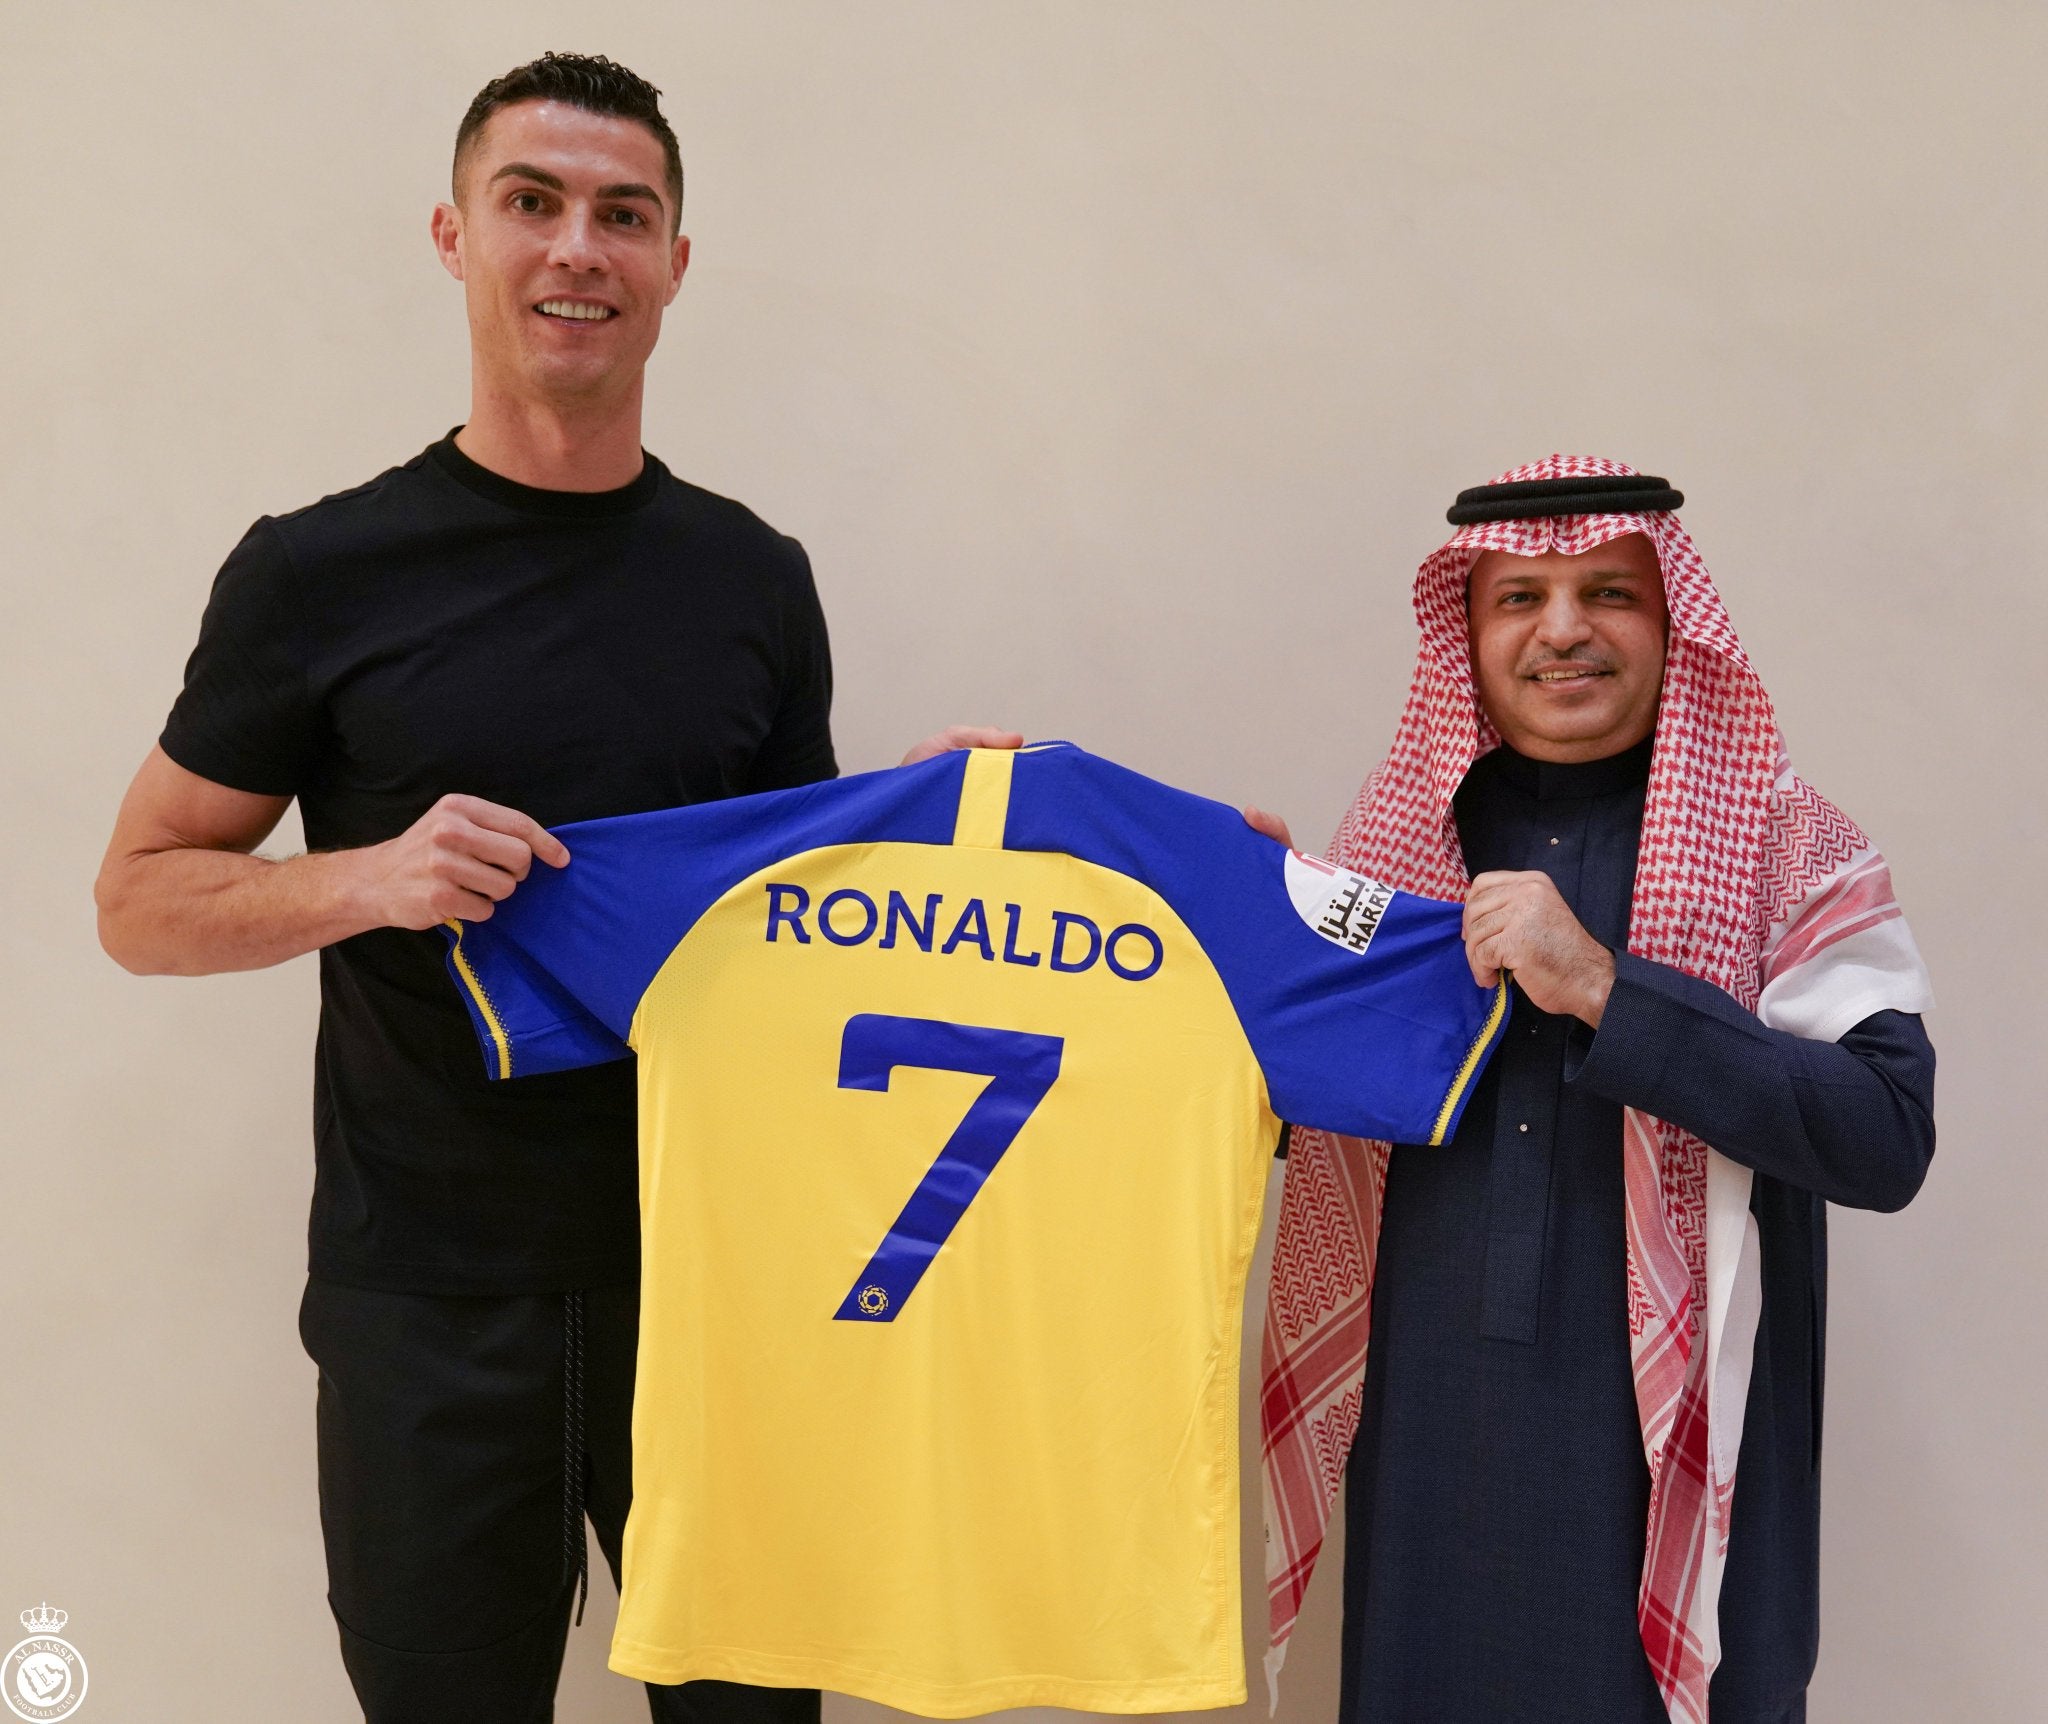 Ronaldo’s move to Al-Nassr was confirmed in December